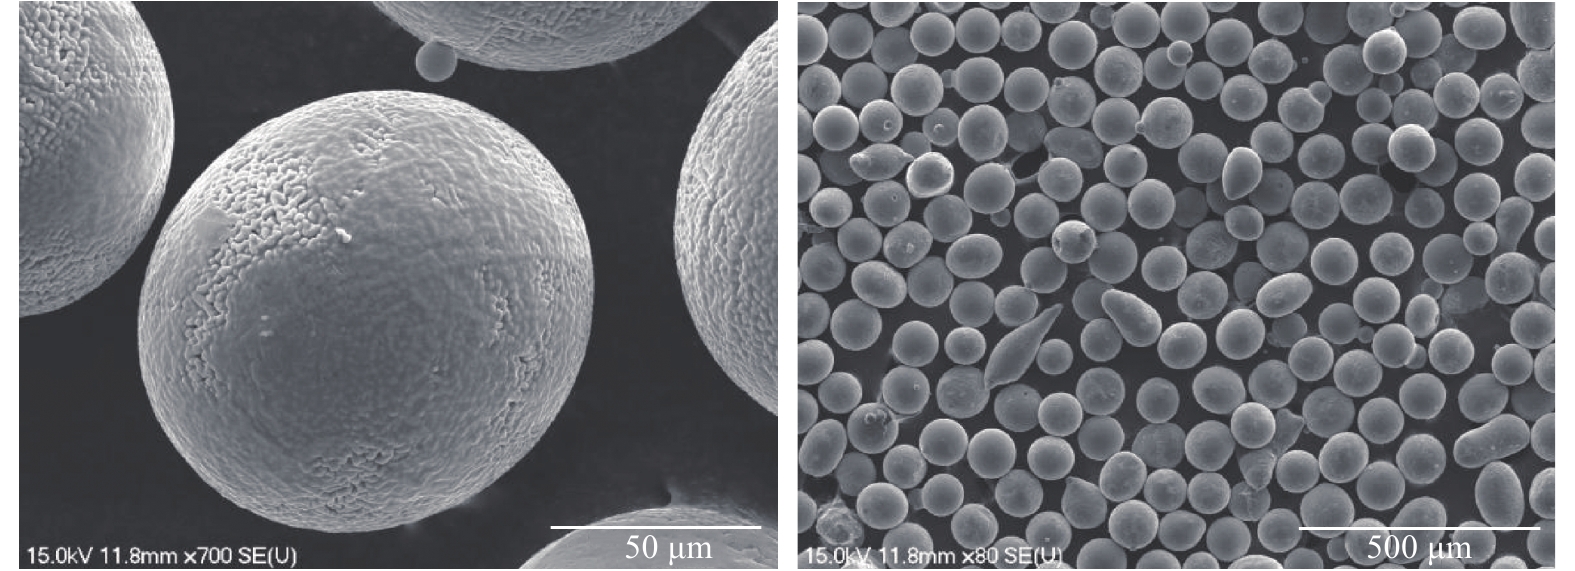 Micromorphology of AlSi10Mg powder